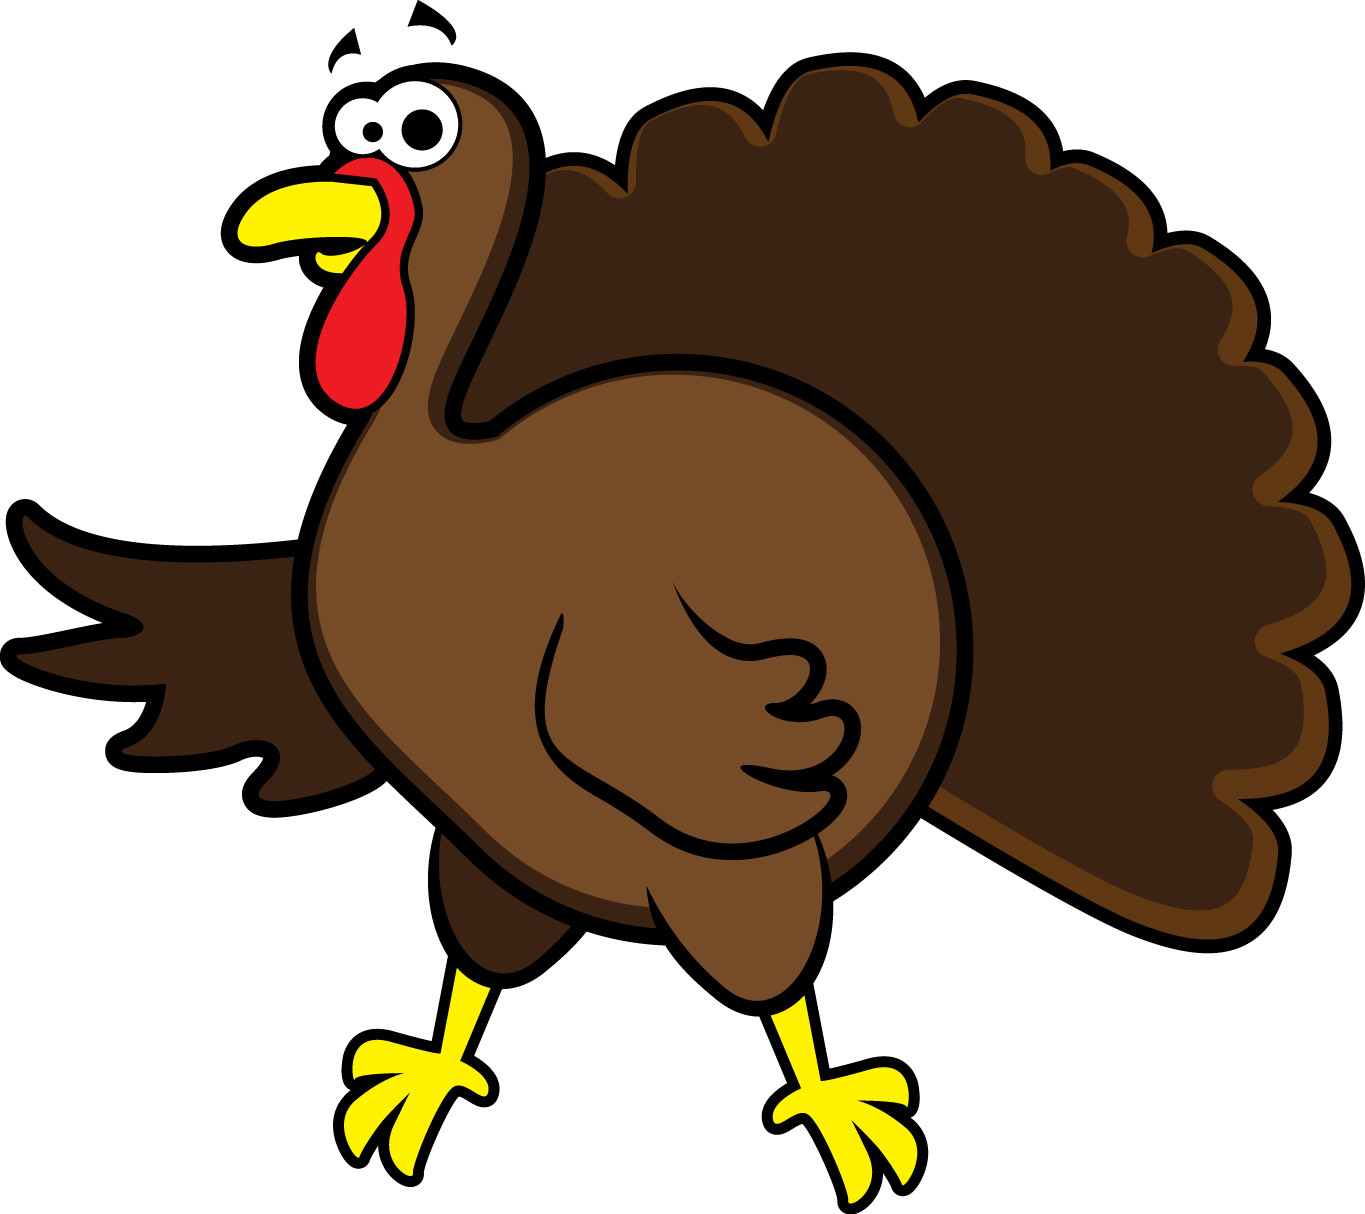 Thanksgiving Turkey Graphic
 Thanksgiving clip art Thanksgiving clipart Download free